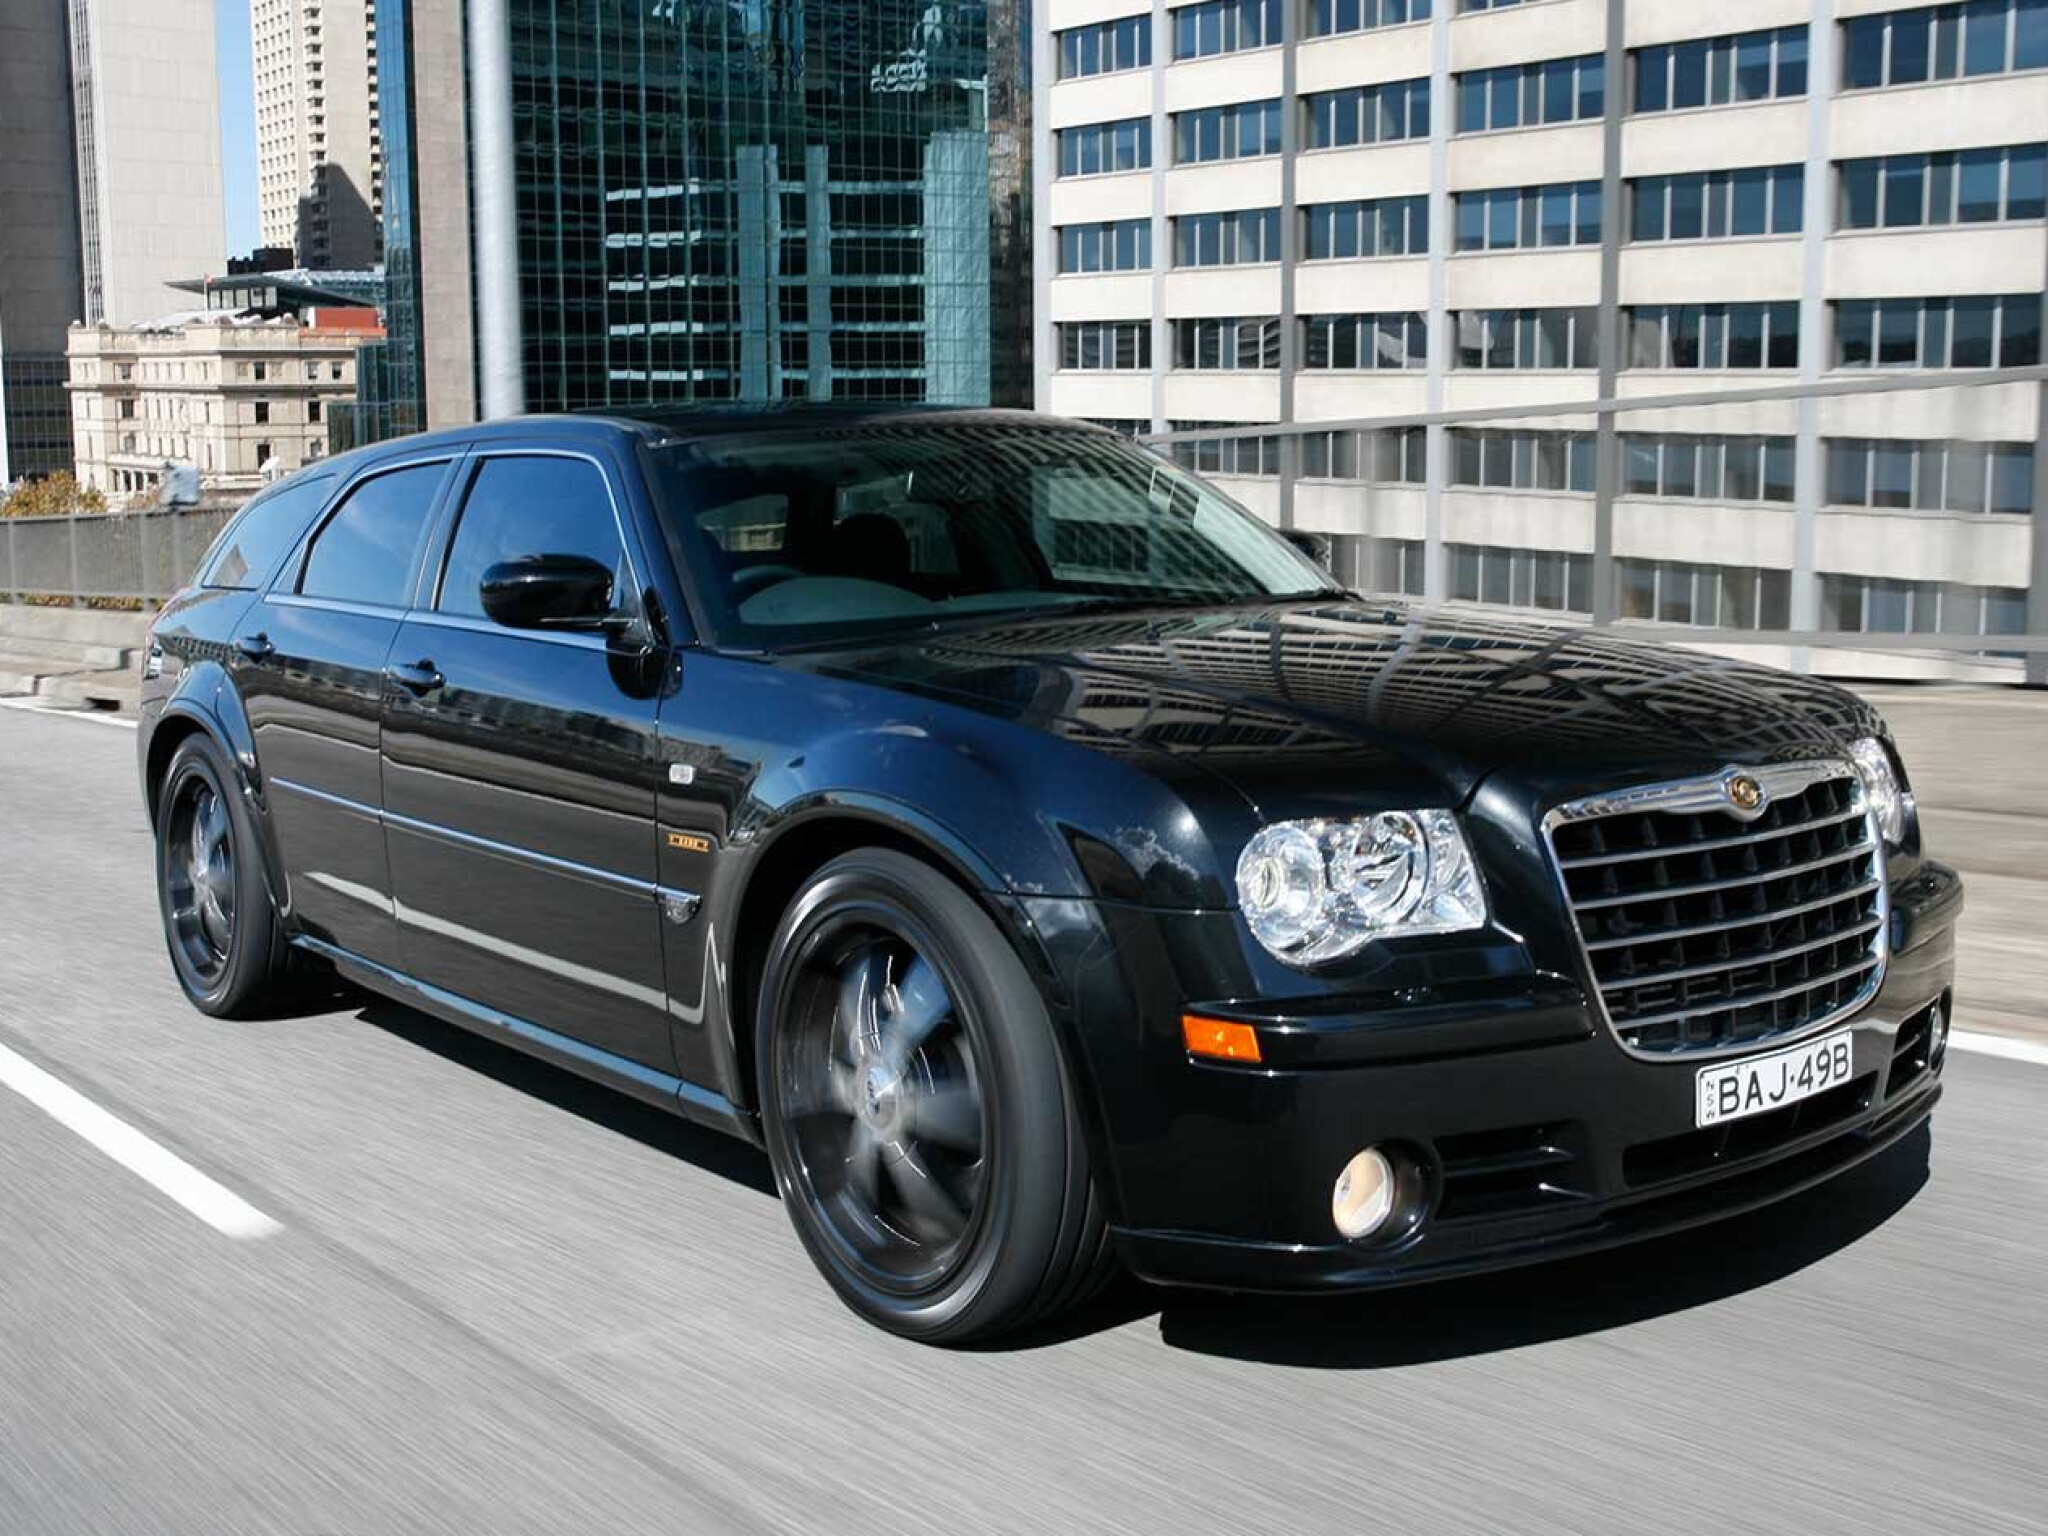 https://assets.whichcar.com.au/image/upload/s--NkSuuZw8--/c_fill,f_auto,q_auto:good/t_p_4x3/v1/archive/whichcar/2018/09/07/-1/2007-Chrysler-SRT8-E490-review-classic-MOTOR.jpg